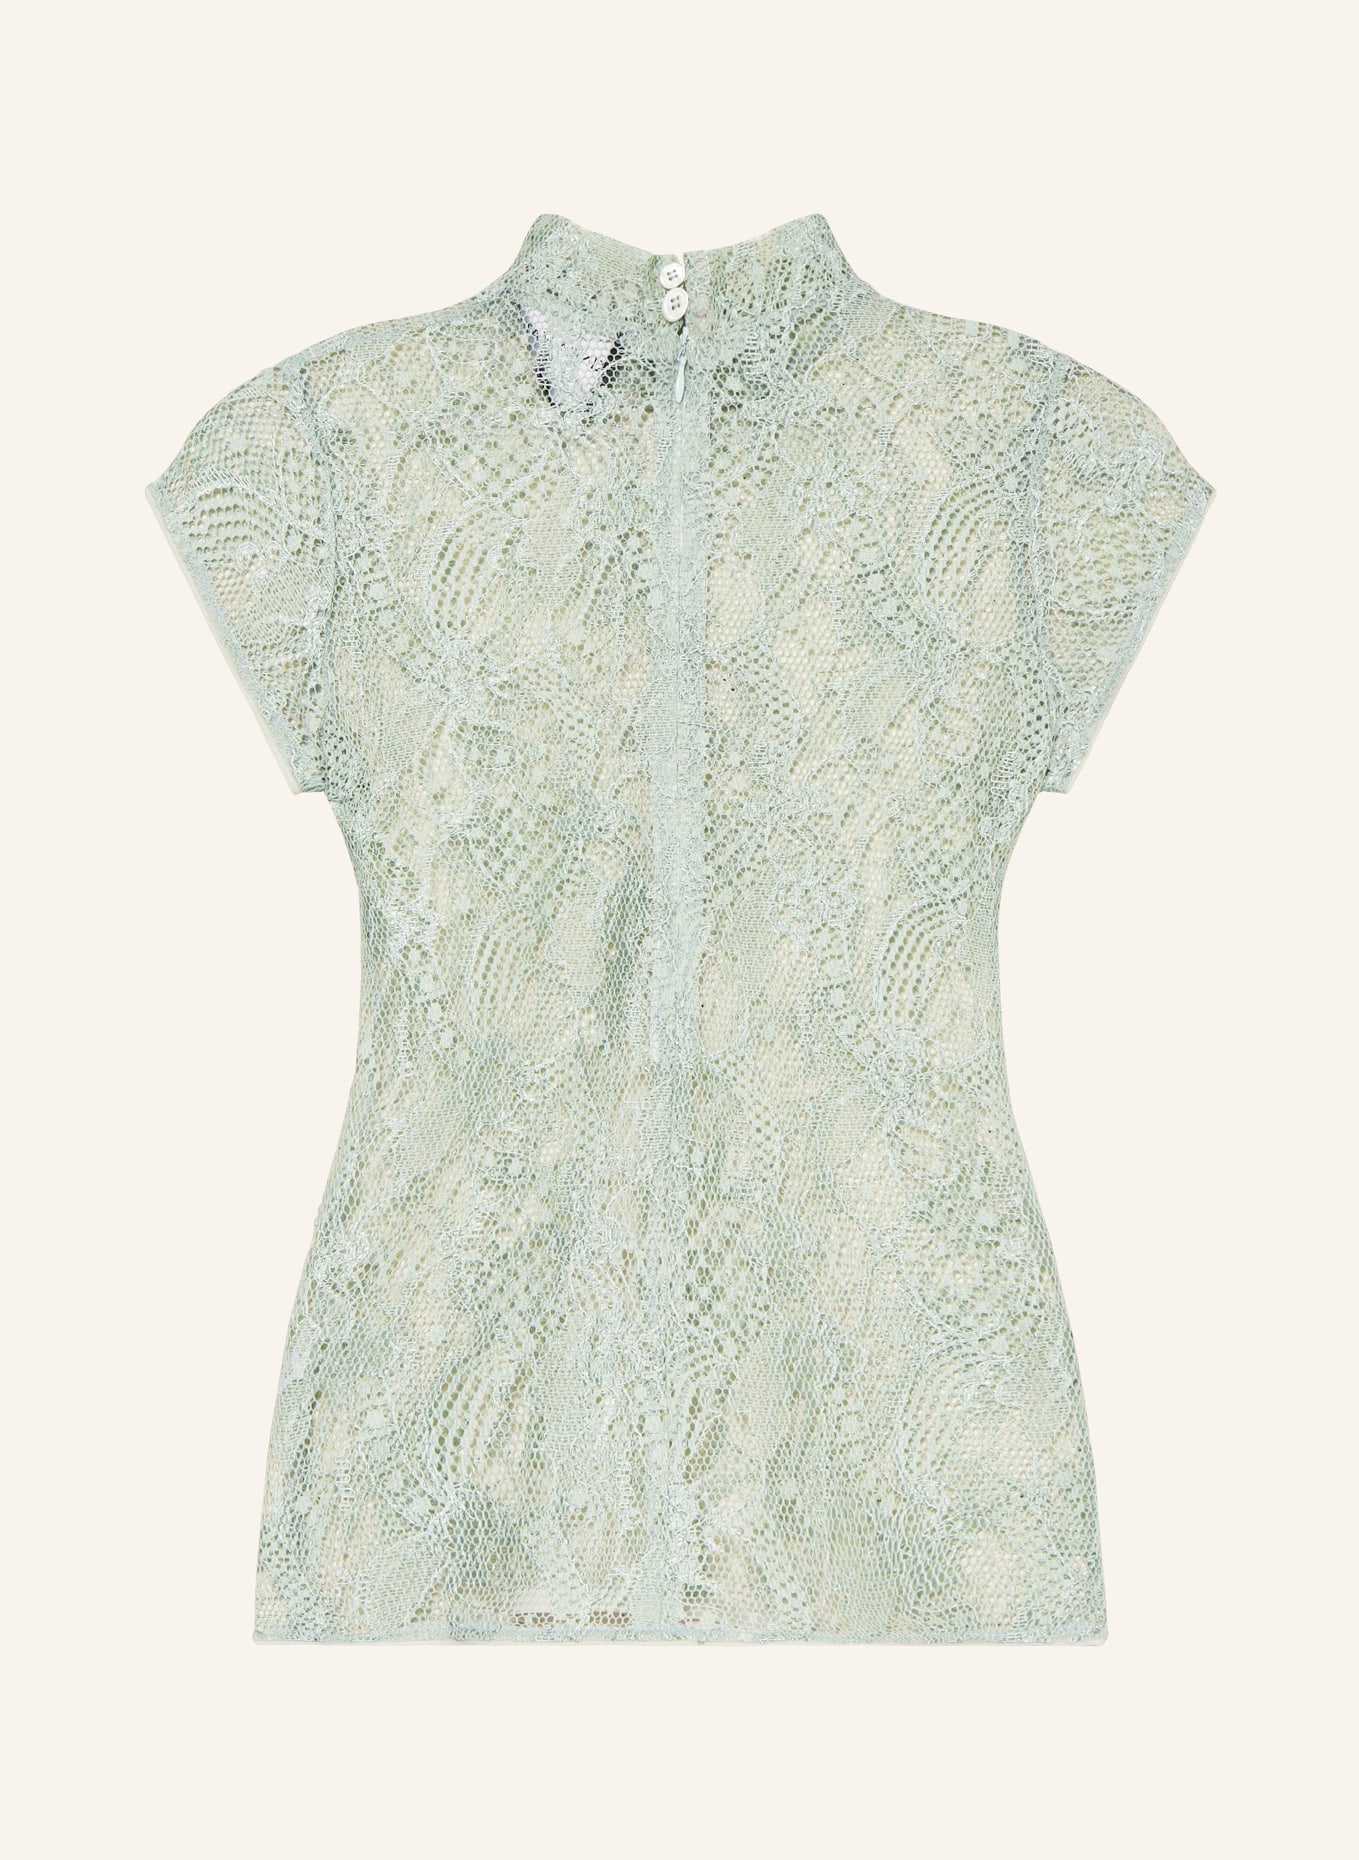 KINGA MATHE Dirndl blouse CHARLOTTE made of lace, Color: MINT (Image 2)